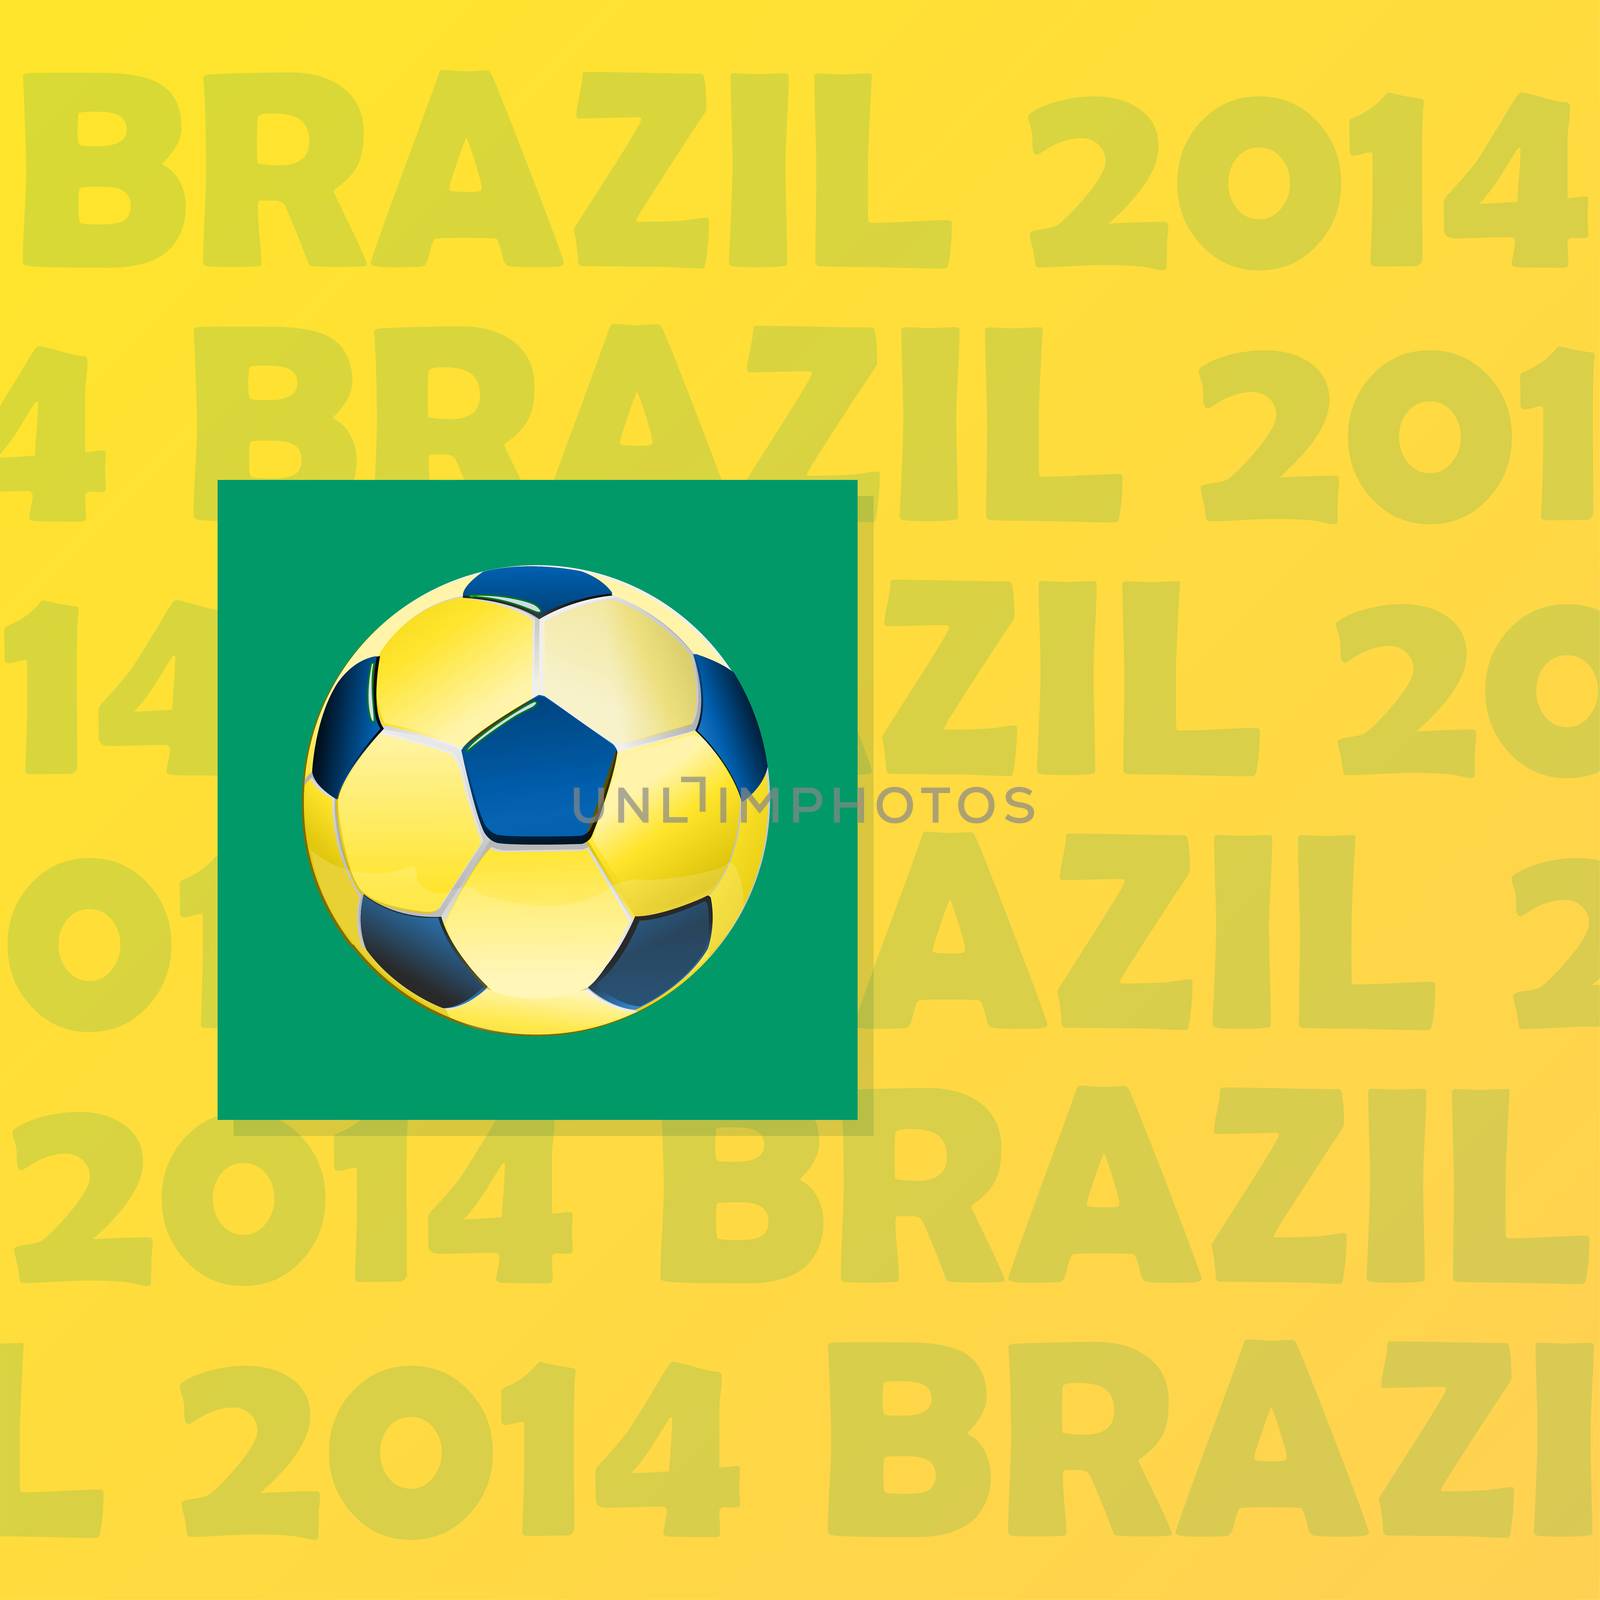 Brazil 2014 poster by marinini